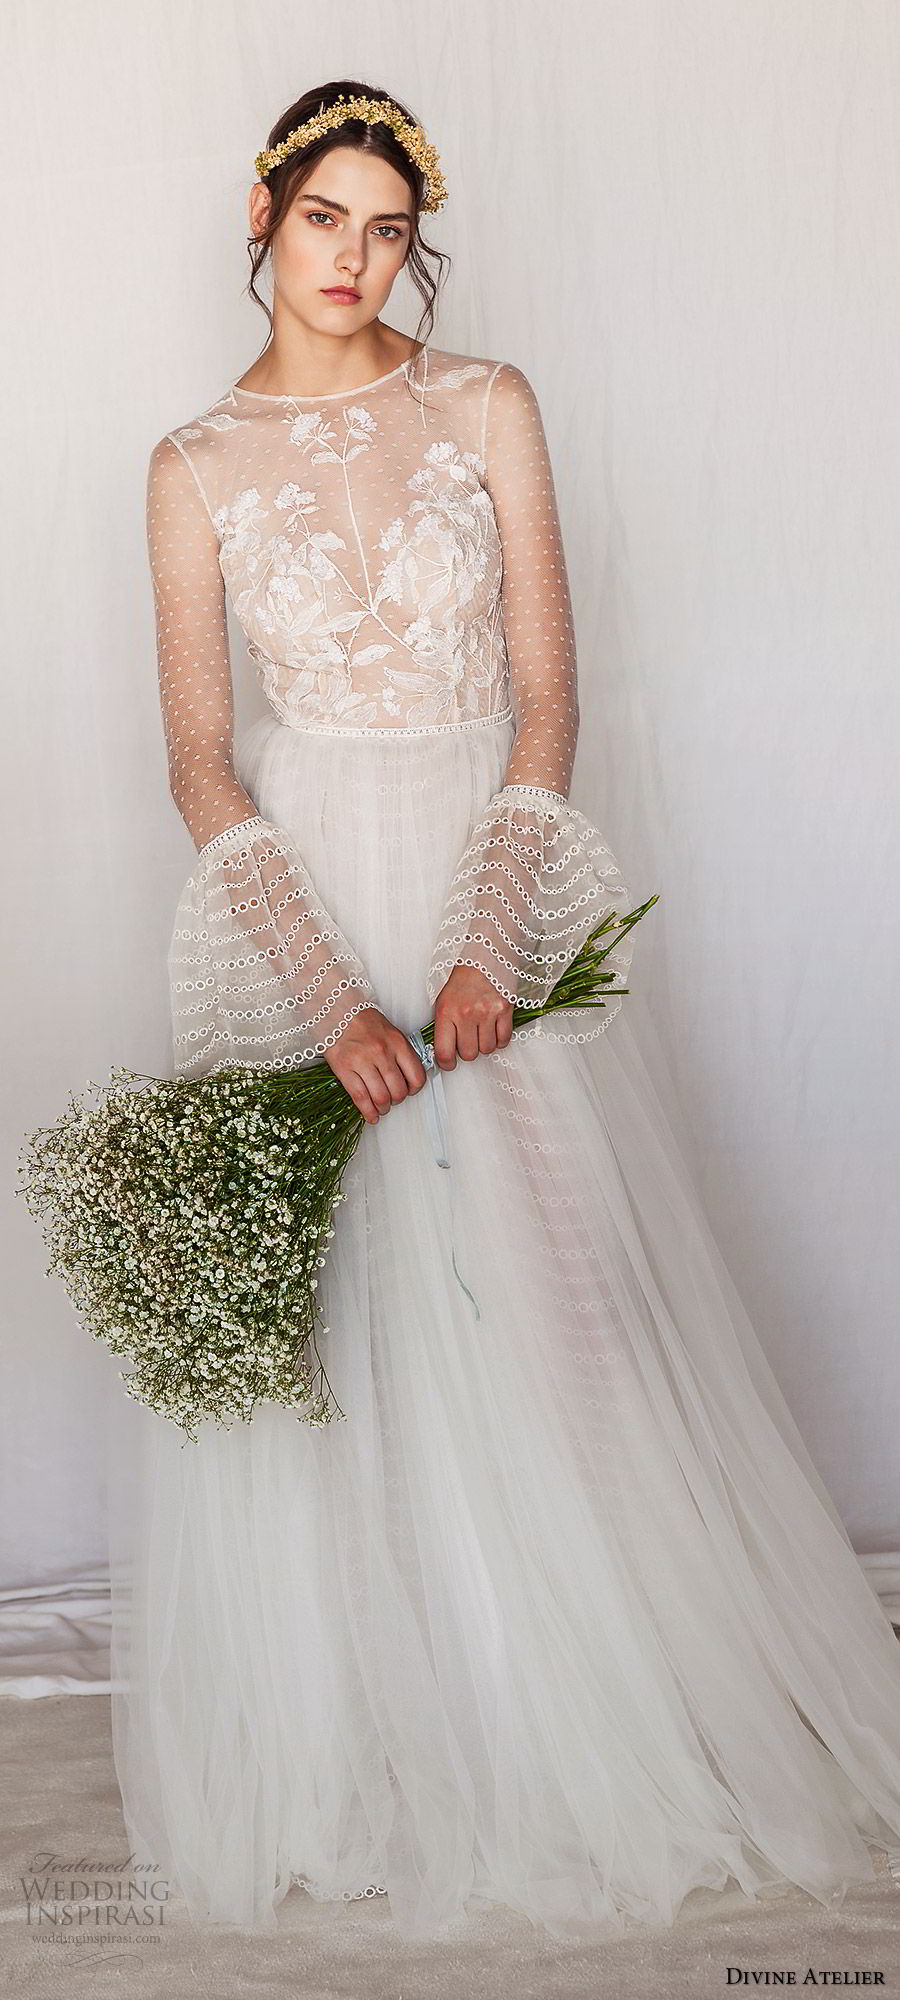 divine atelier 2019 bridal illusion long bell sleeves jewel neck sheer embellished bodice a line ball gown wedding dress (1) sweep train romantic elegant mv 